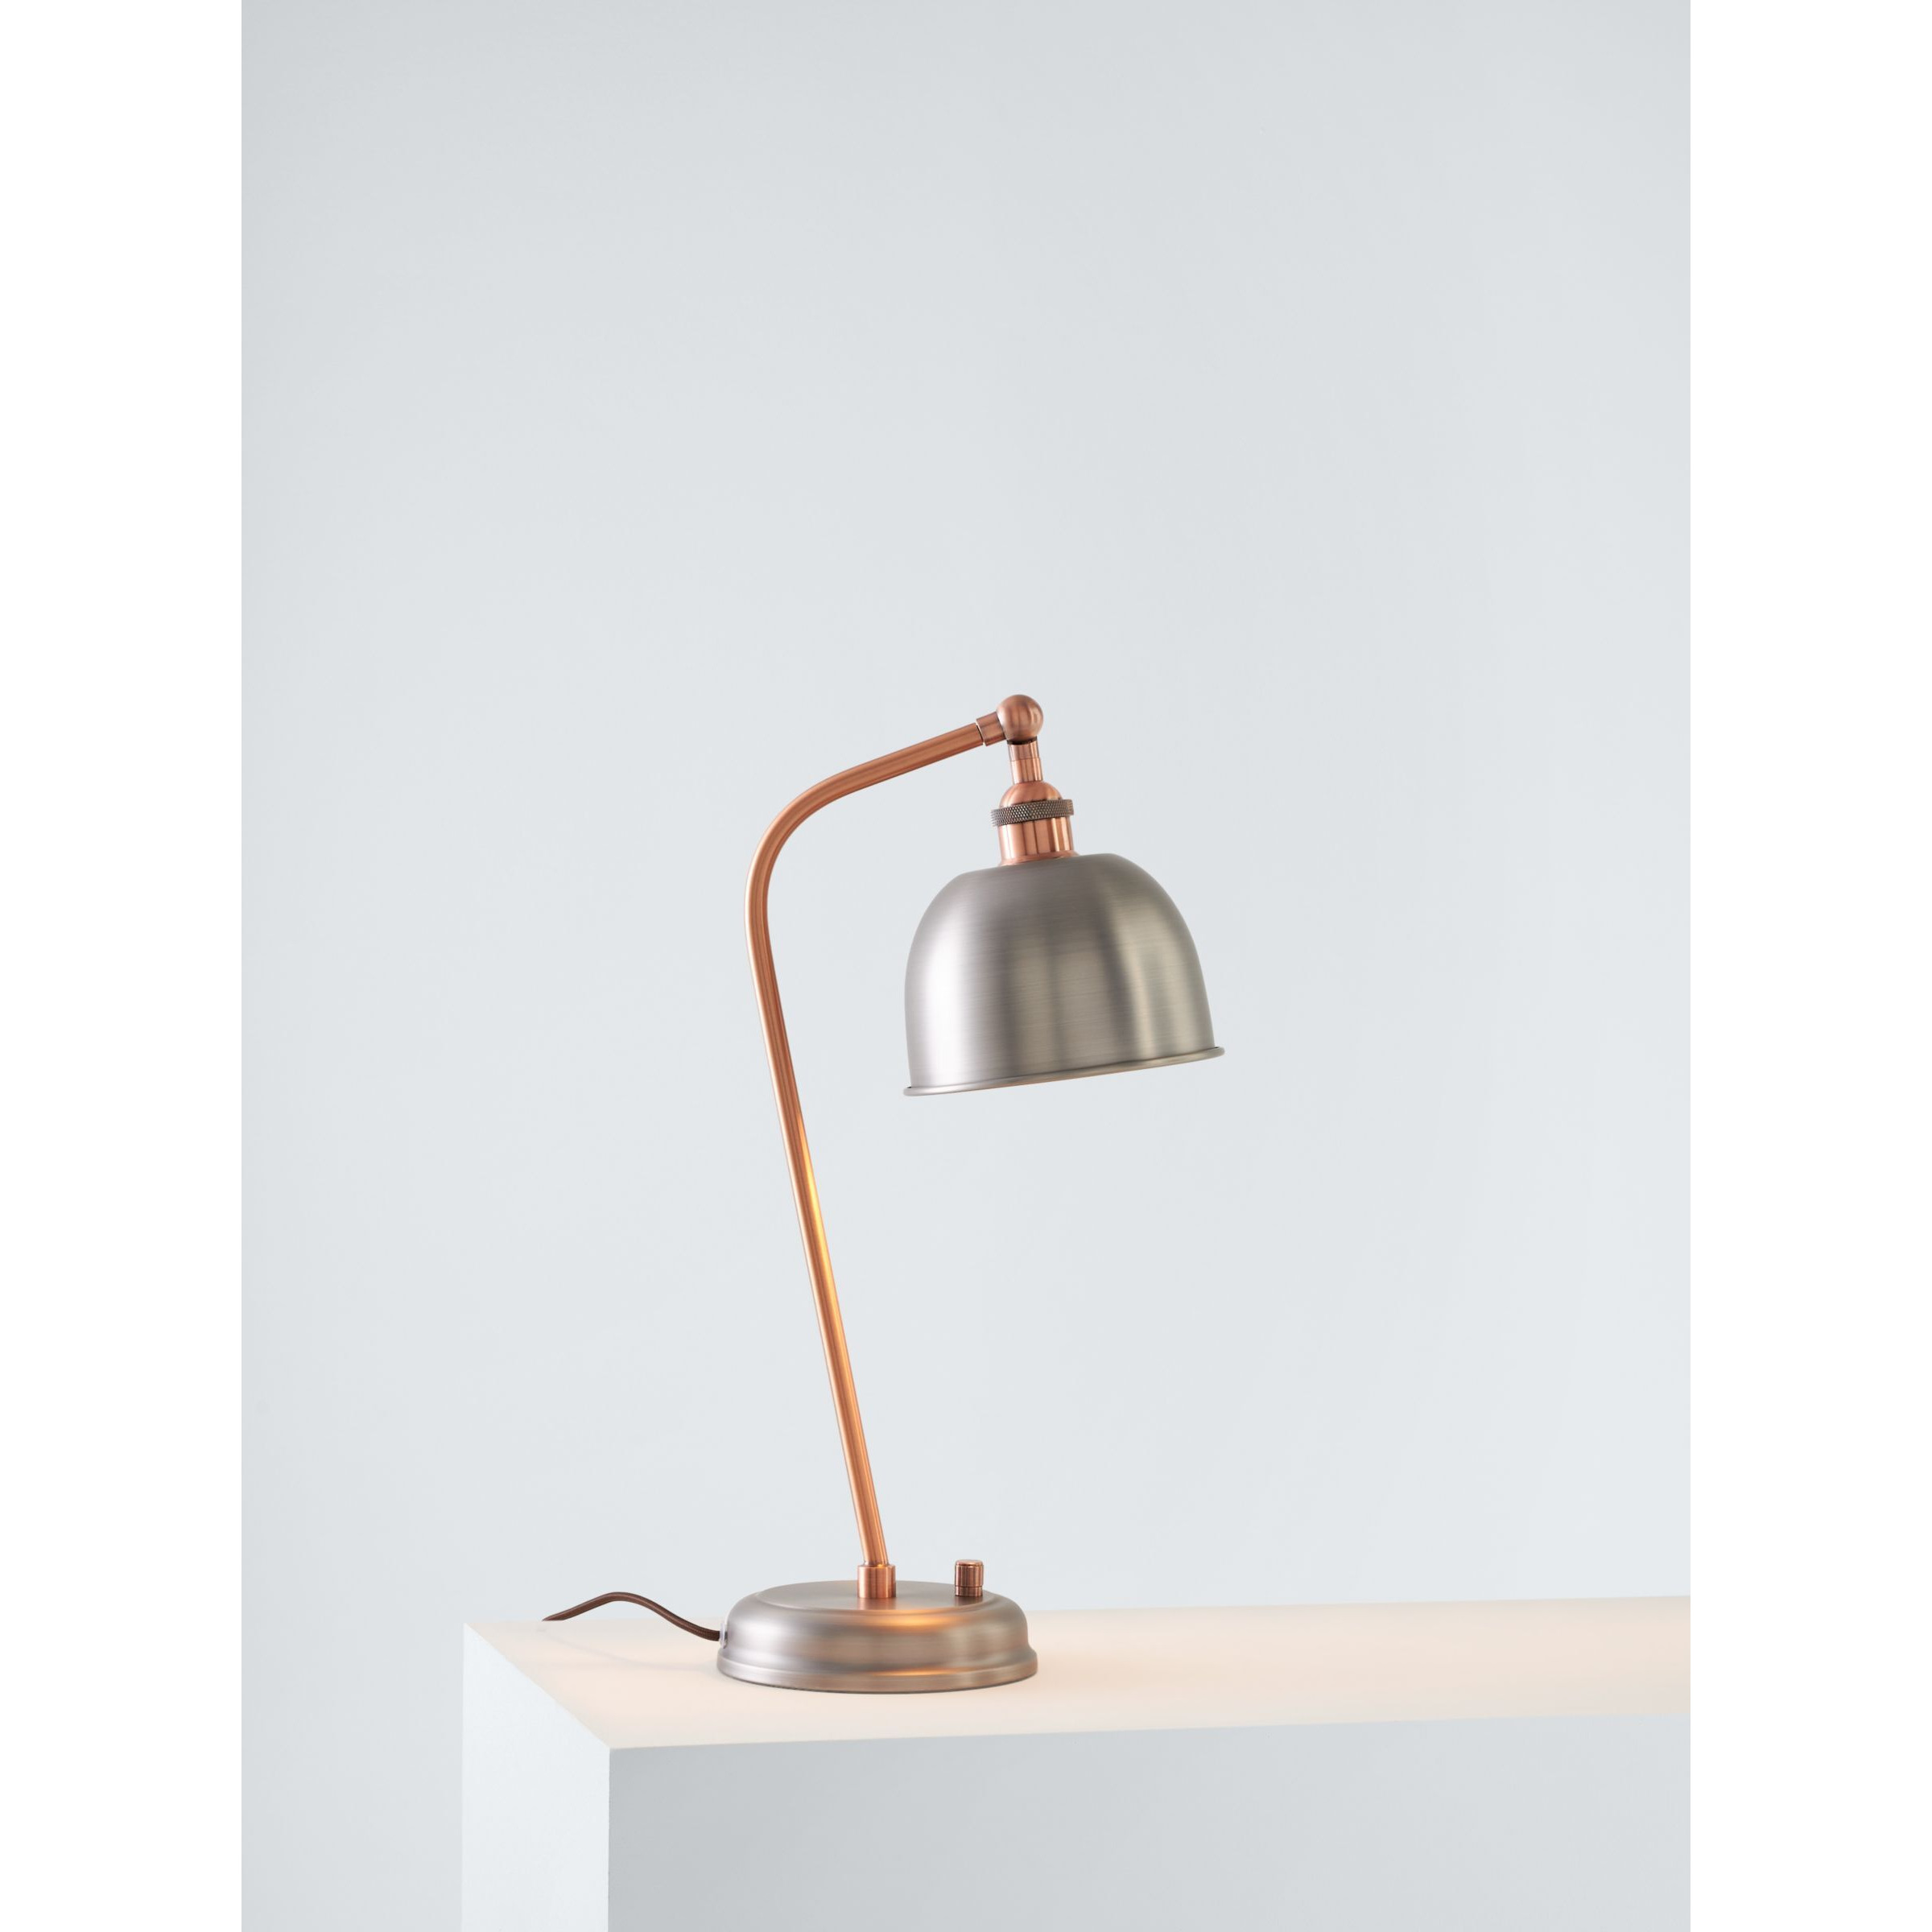 John Lewis Baldwin Desk Lamp - image 1